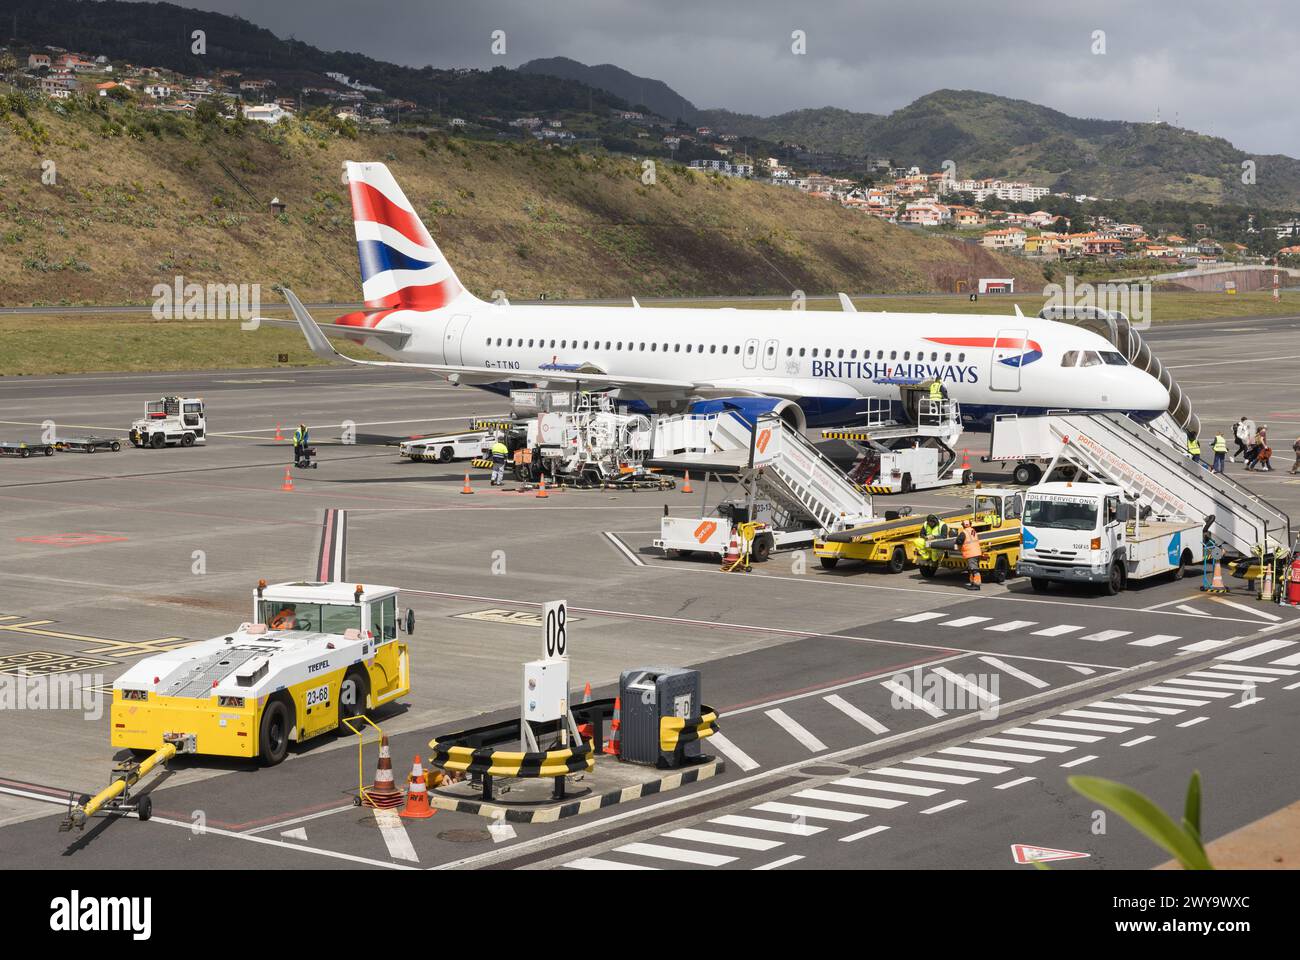 British Airways passenger aircraft parked at Cristiano Ronaldo InternationFinchal,Madeiraal Airport, Funchal, Madeira. Stock Photo